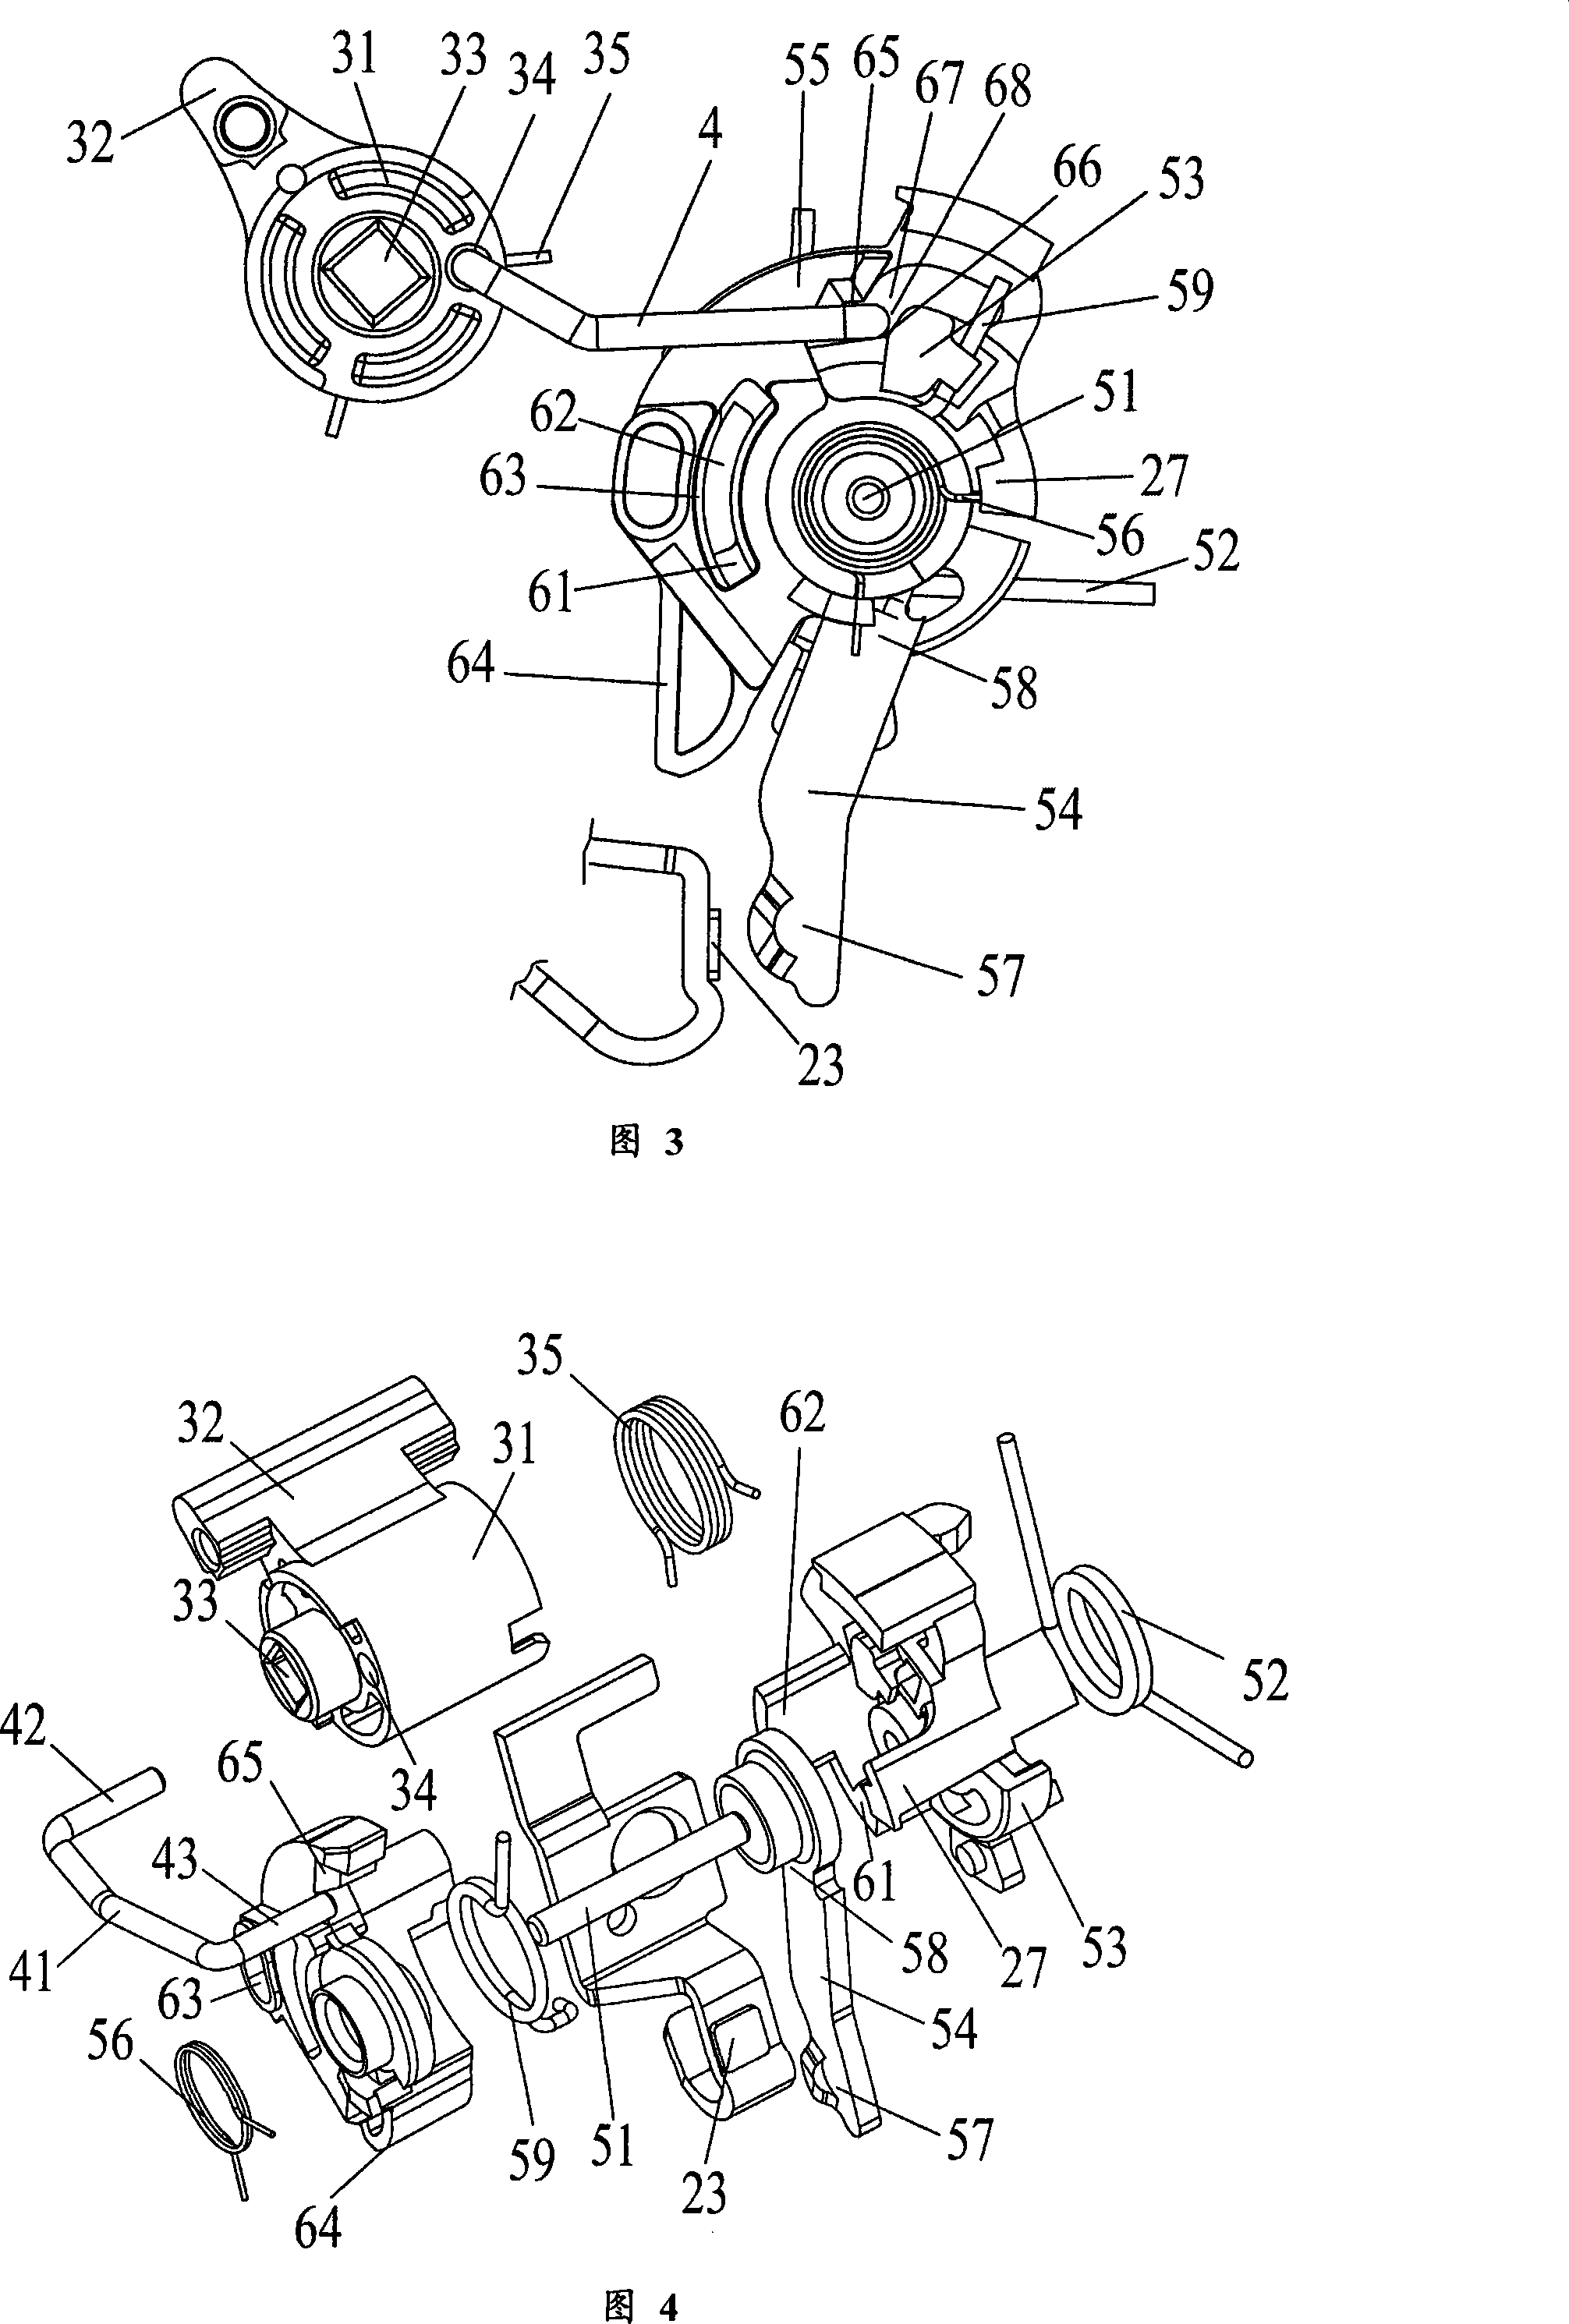 Actuating mechanism of small size circuit breaker